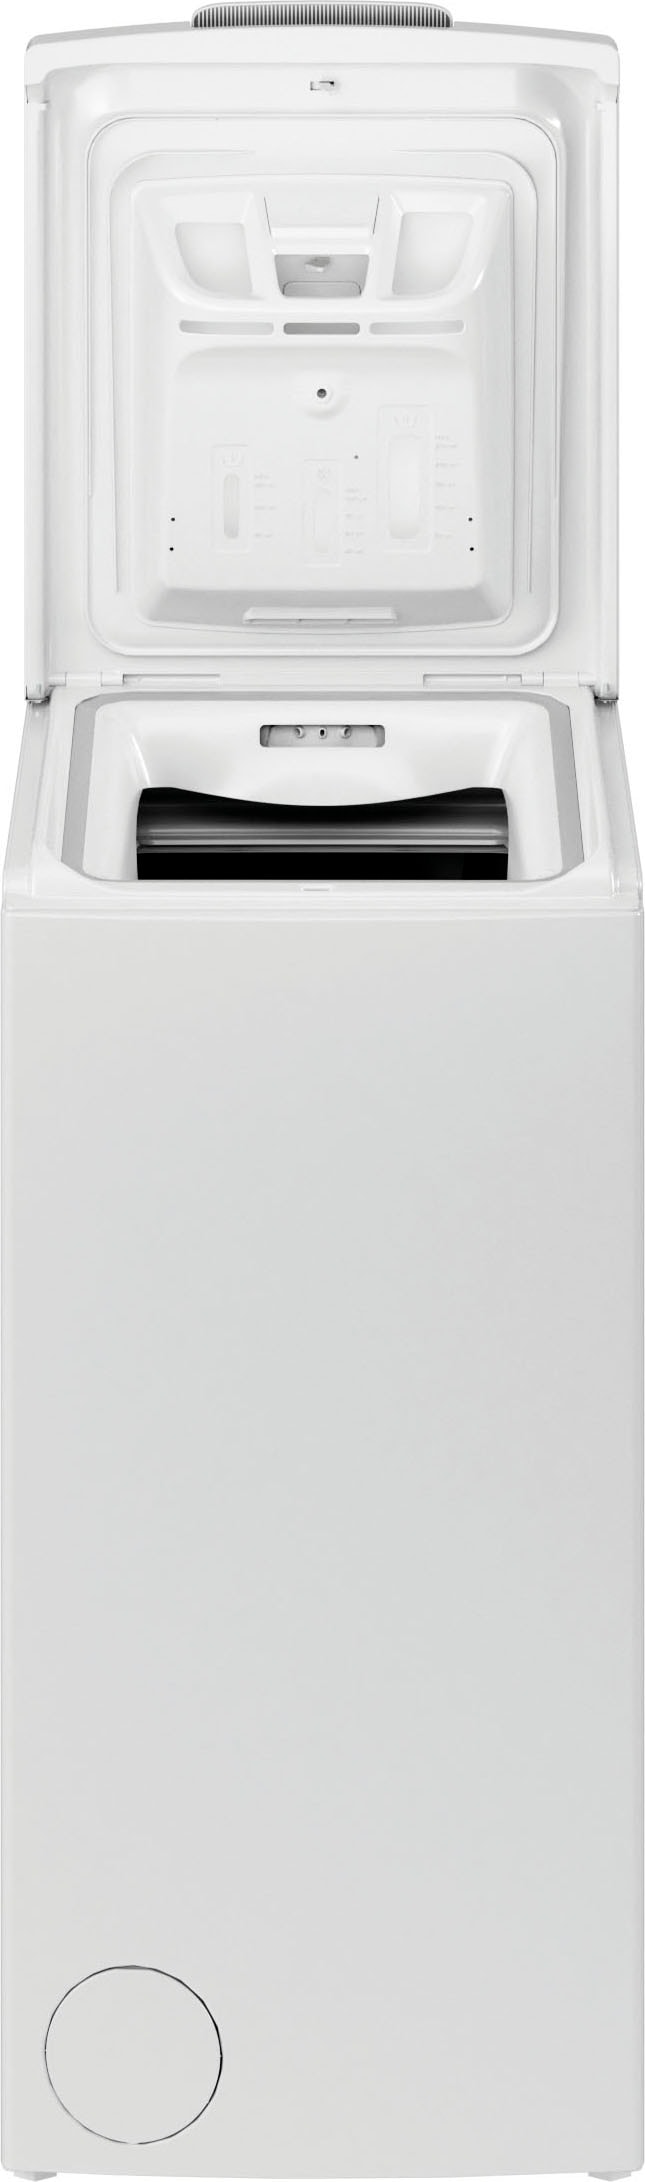 Privileg Waschmaschine Toplader »PWT C S6245E«, PWT C S6245E, 6 kg, 1200 U/min